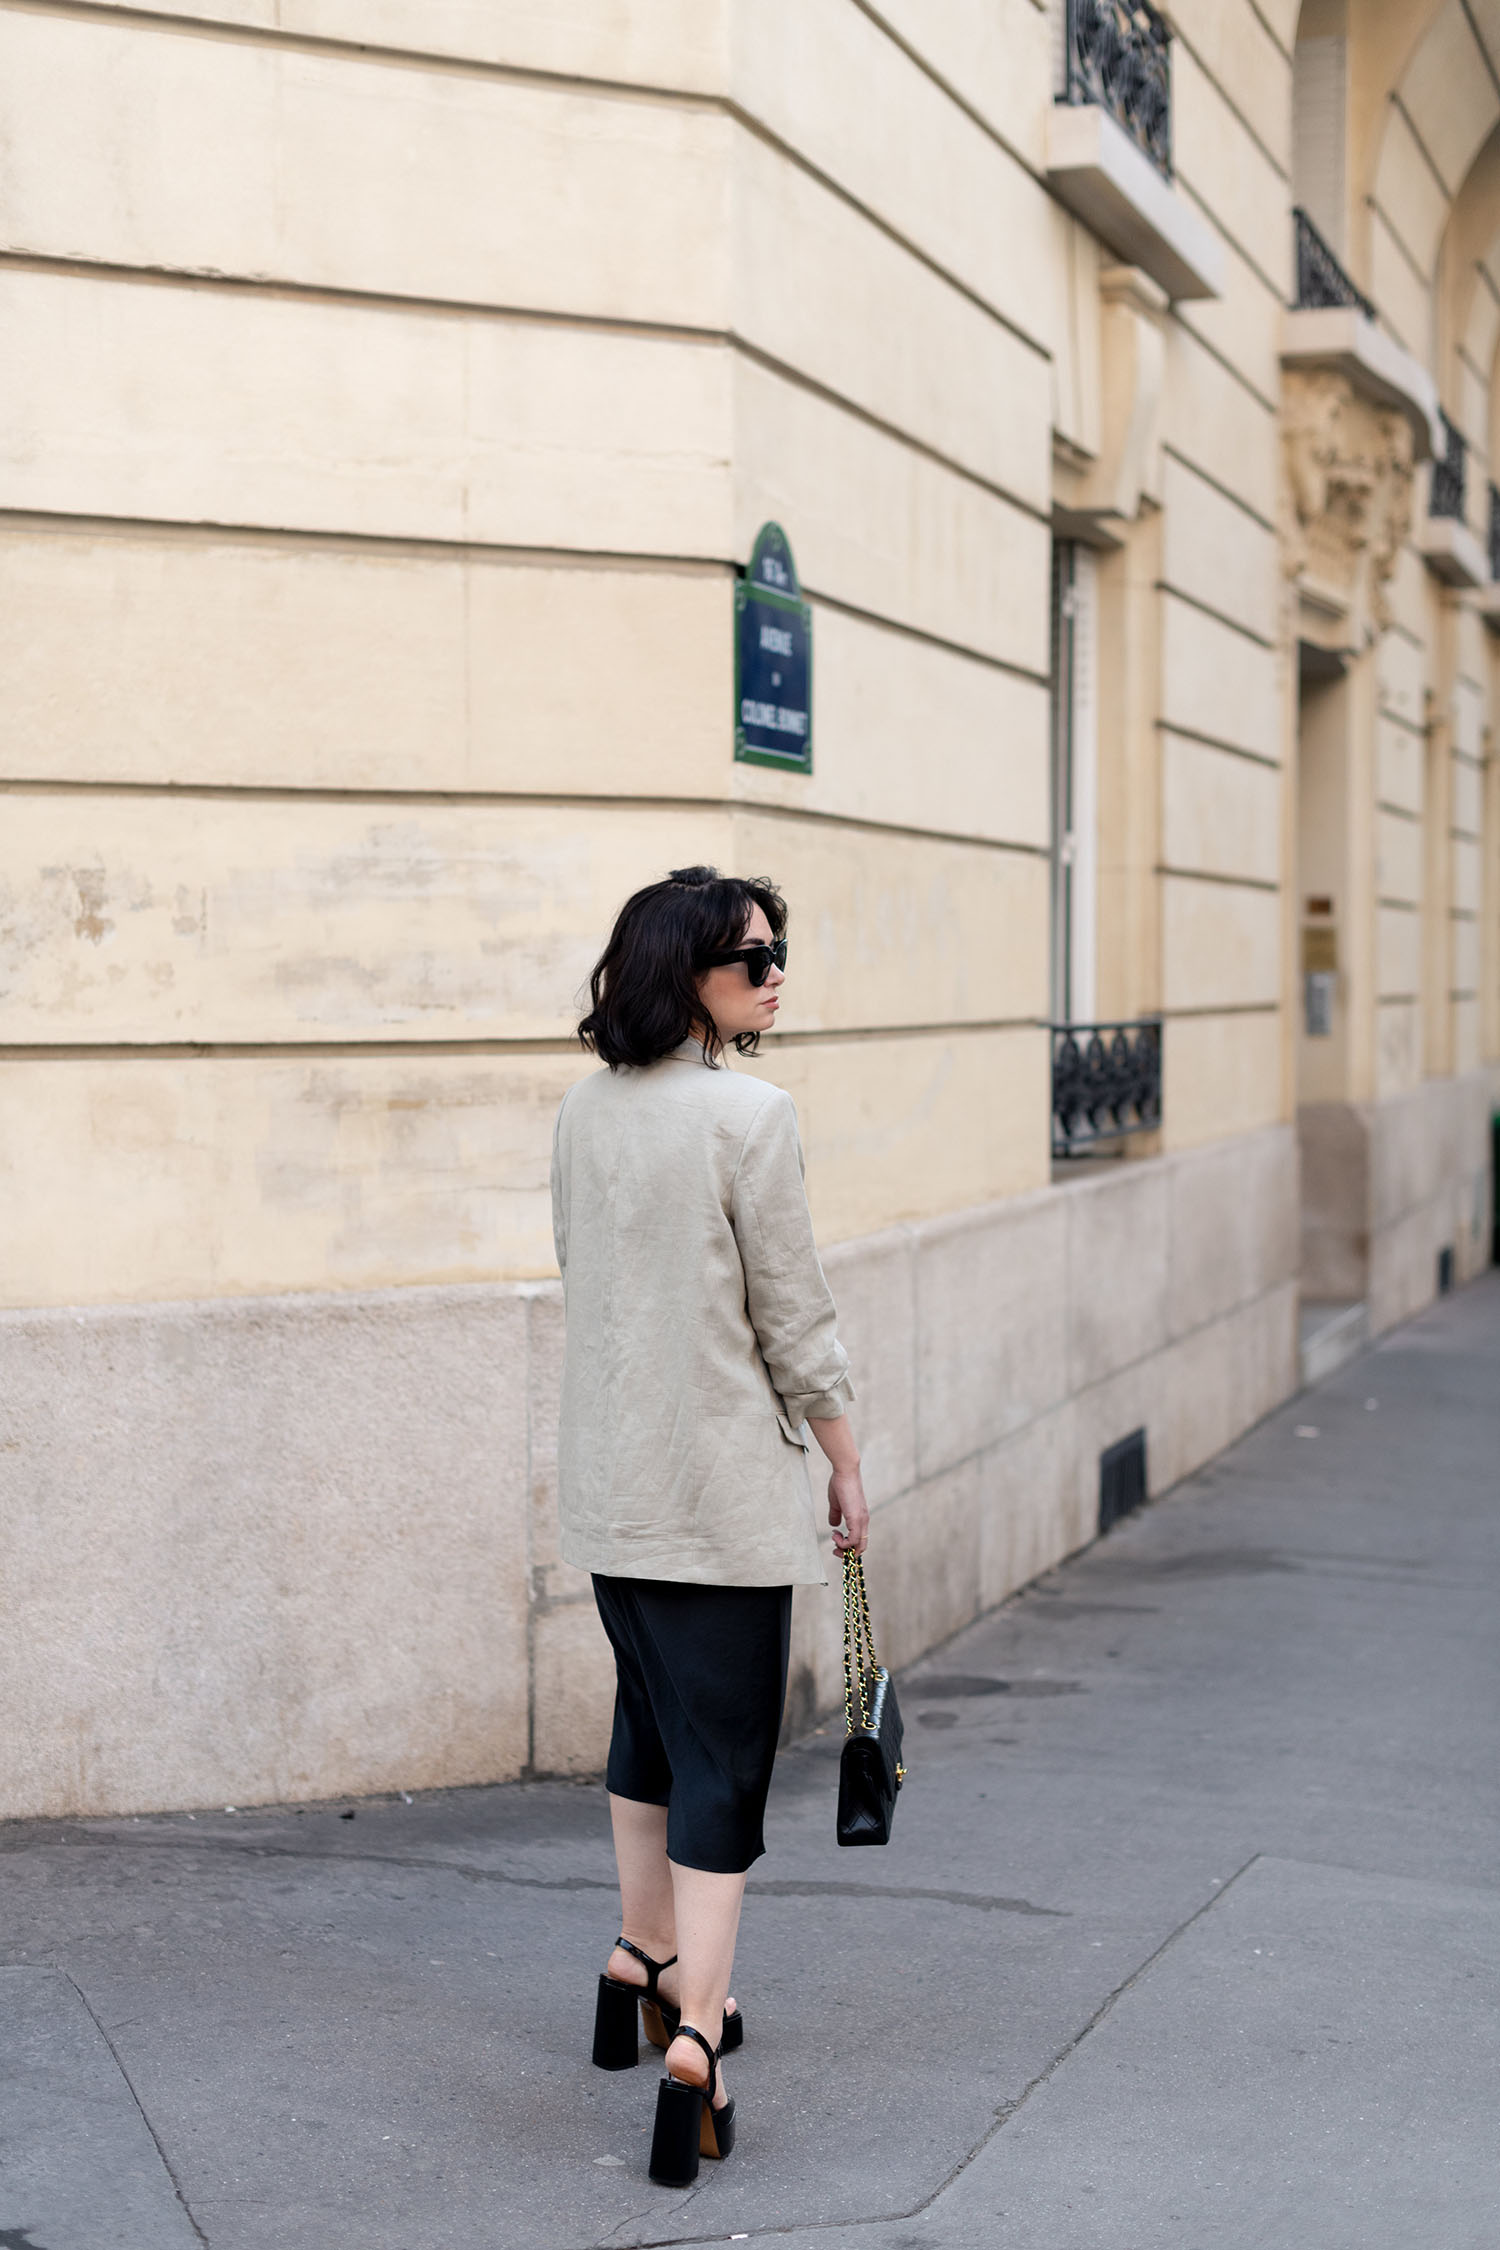 Coco & Voltaire - Chanel double flap handbag, Jonak platform sandals, Wilfred Only dress